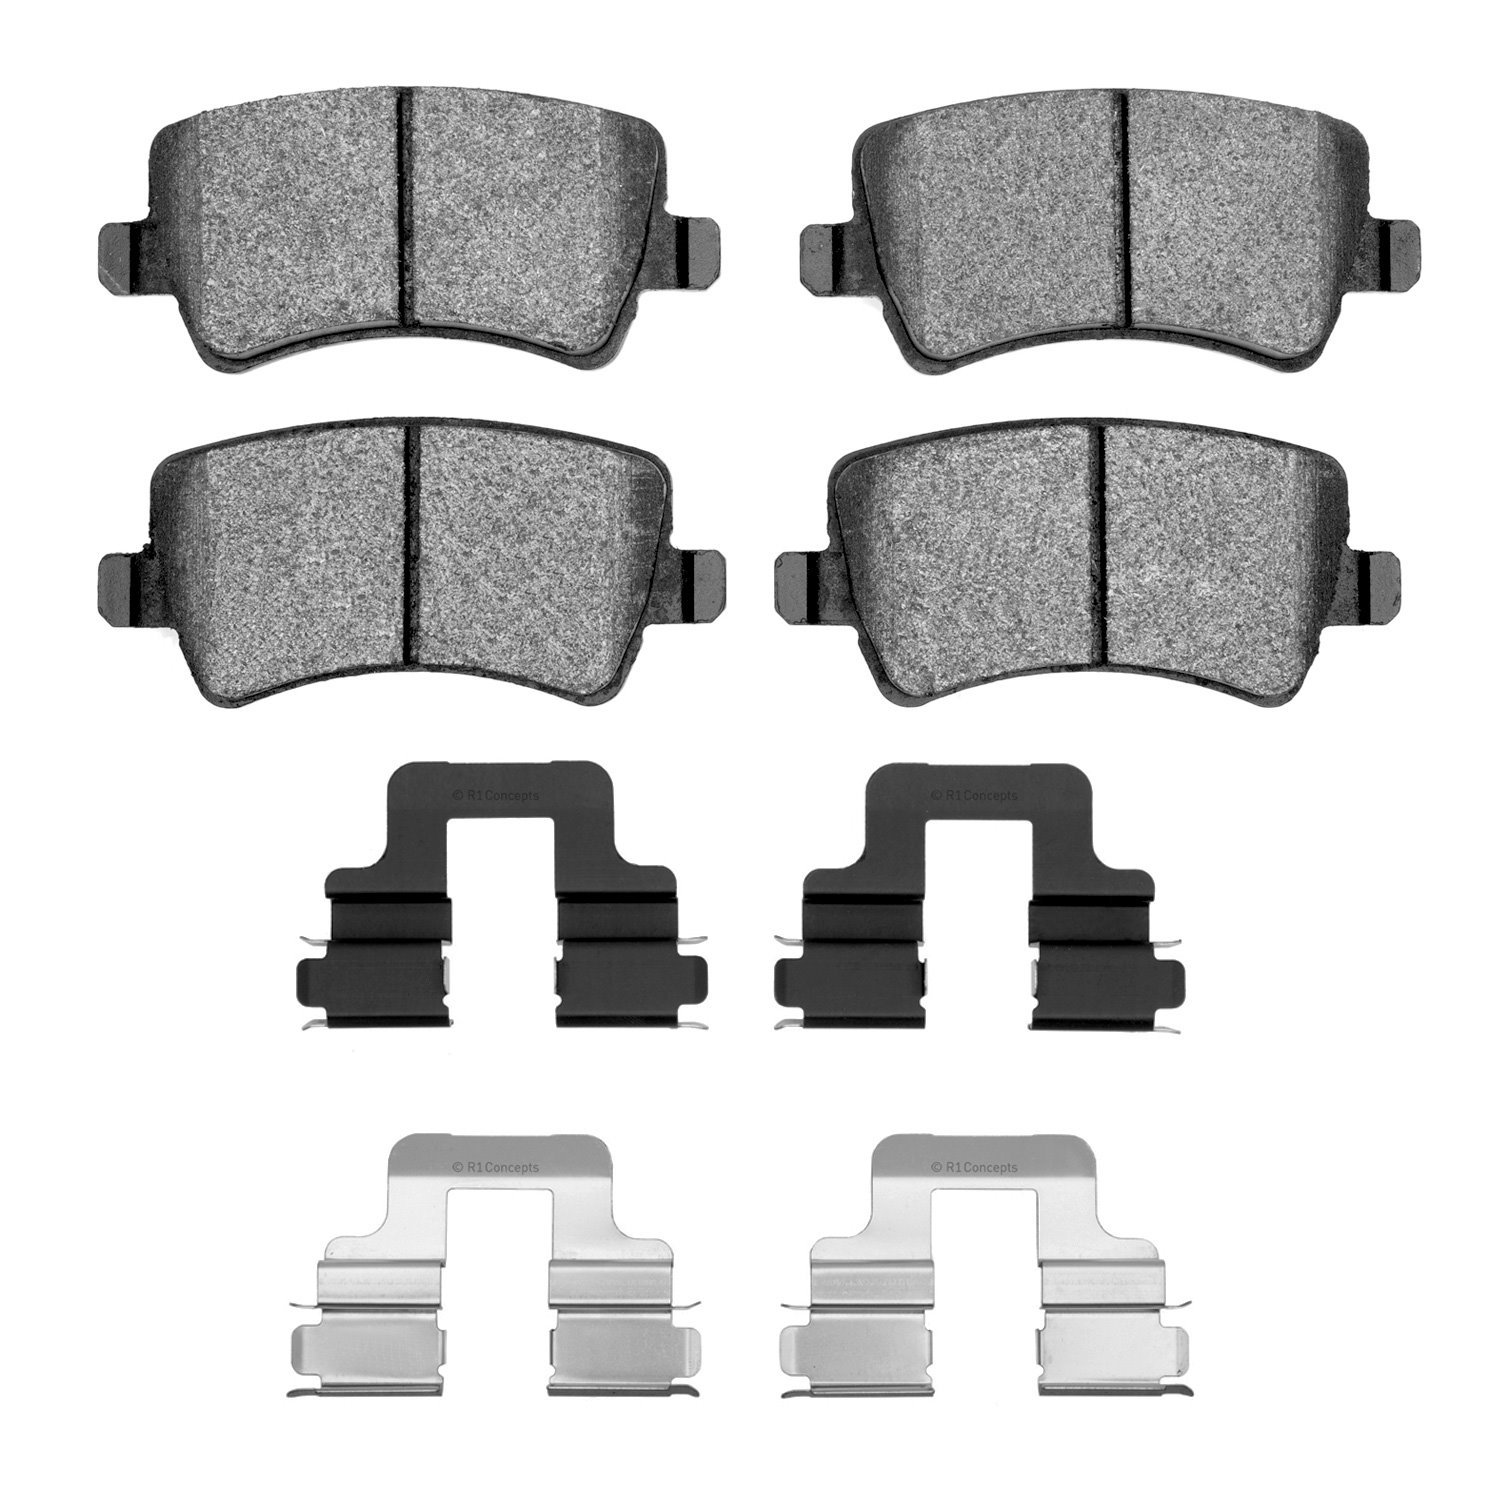 1310-1307-01 3000-Series Ceramic Brake Pads & Hardware Kit, 2007-2018 Multiple Makes/Models, Position: Rear